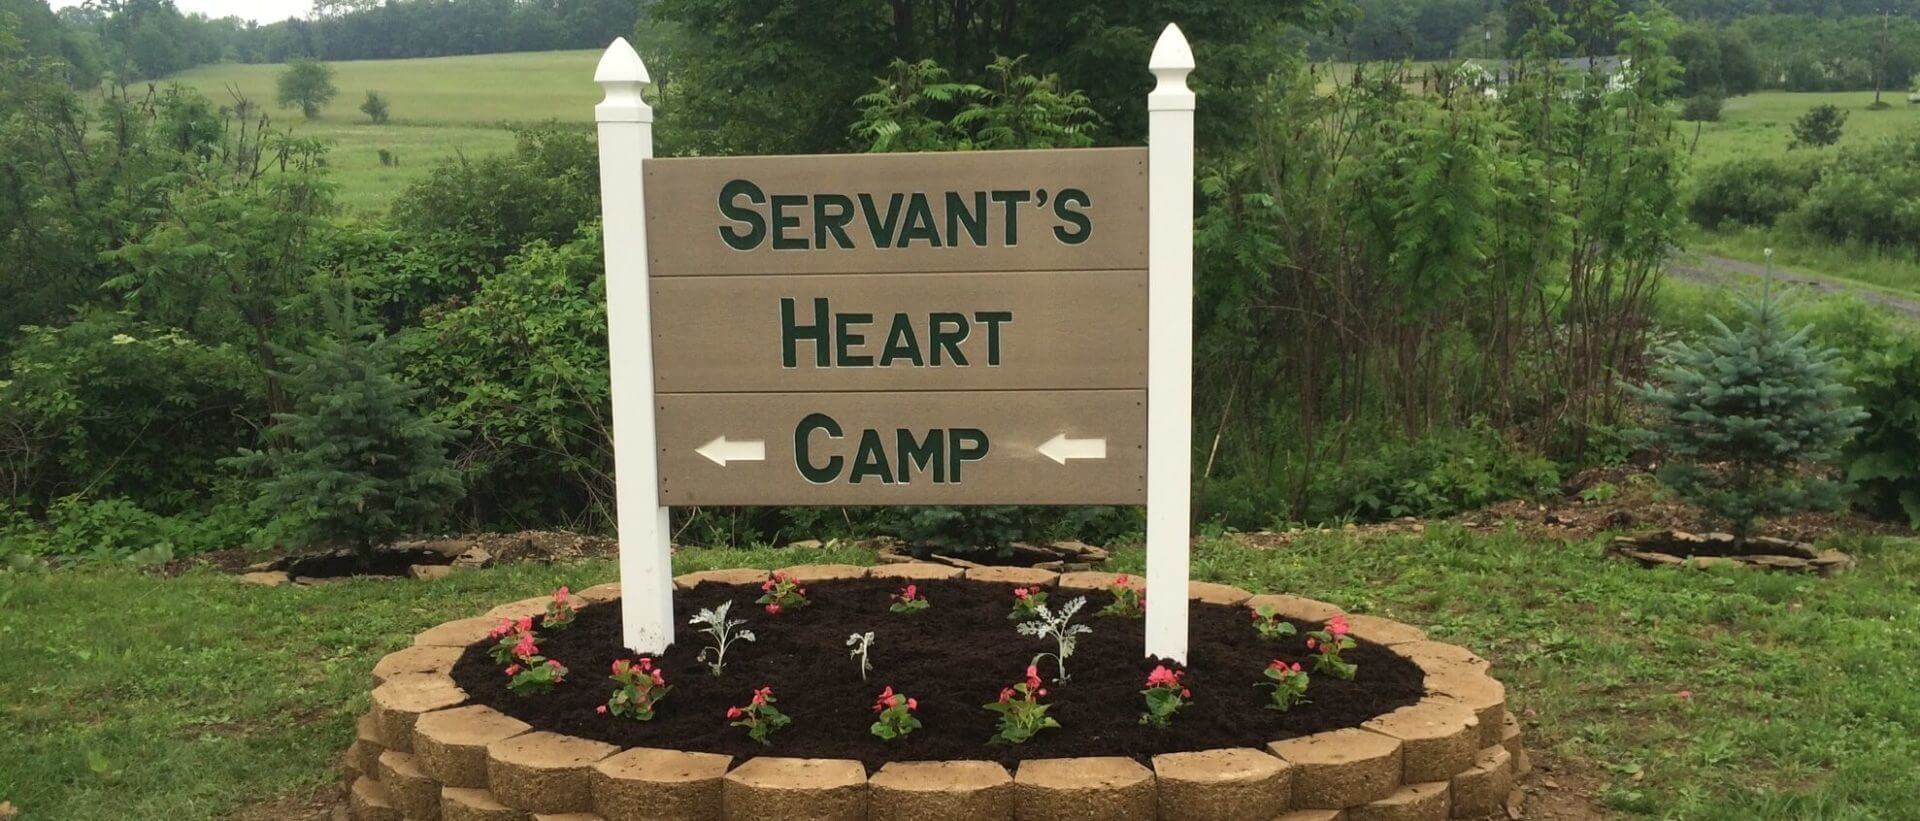 Servant's Heart Camp Sign